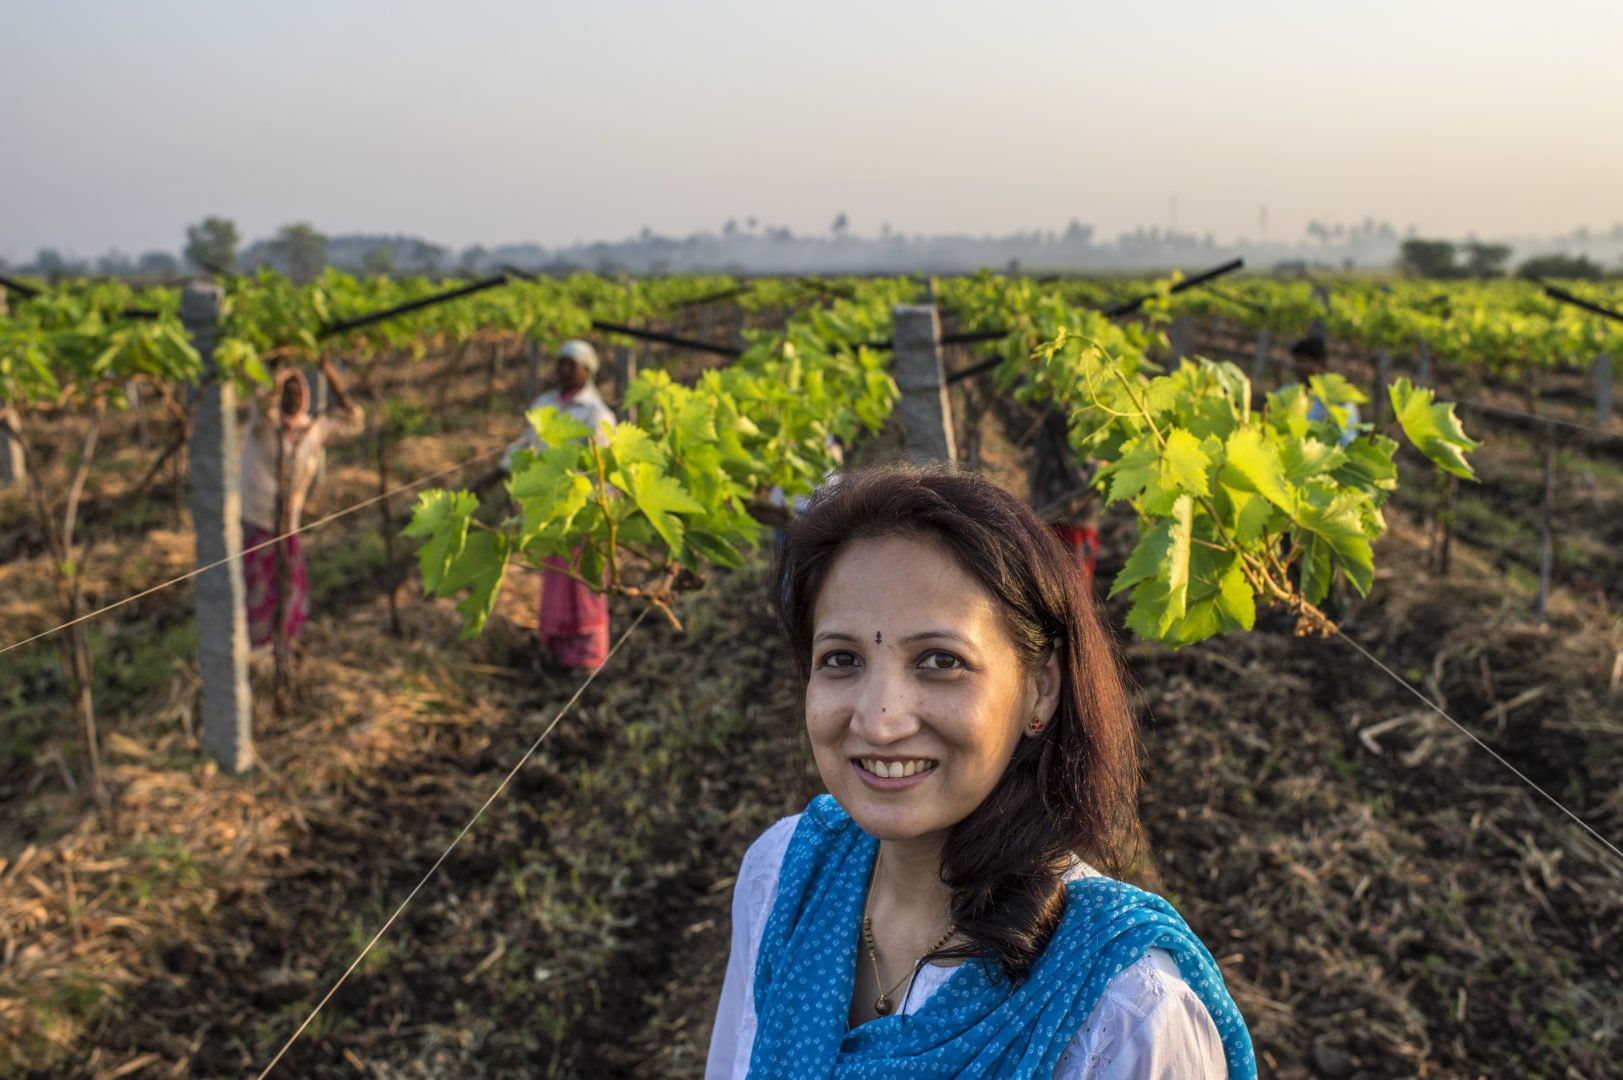 Nina Patil, Director, Fresh Express Logistics, and mentee smiles at her grape farm.